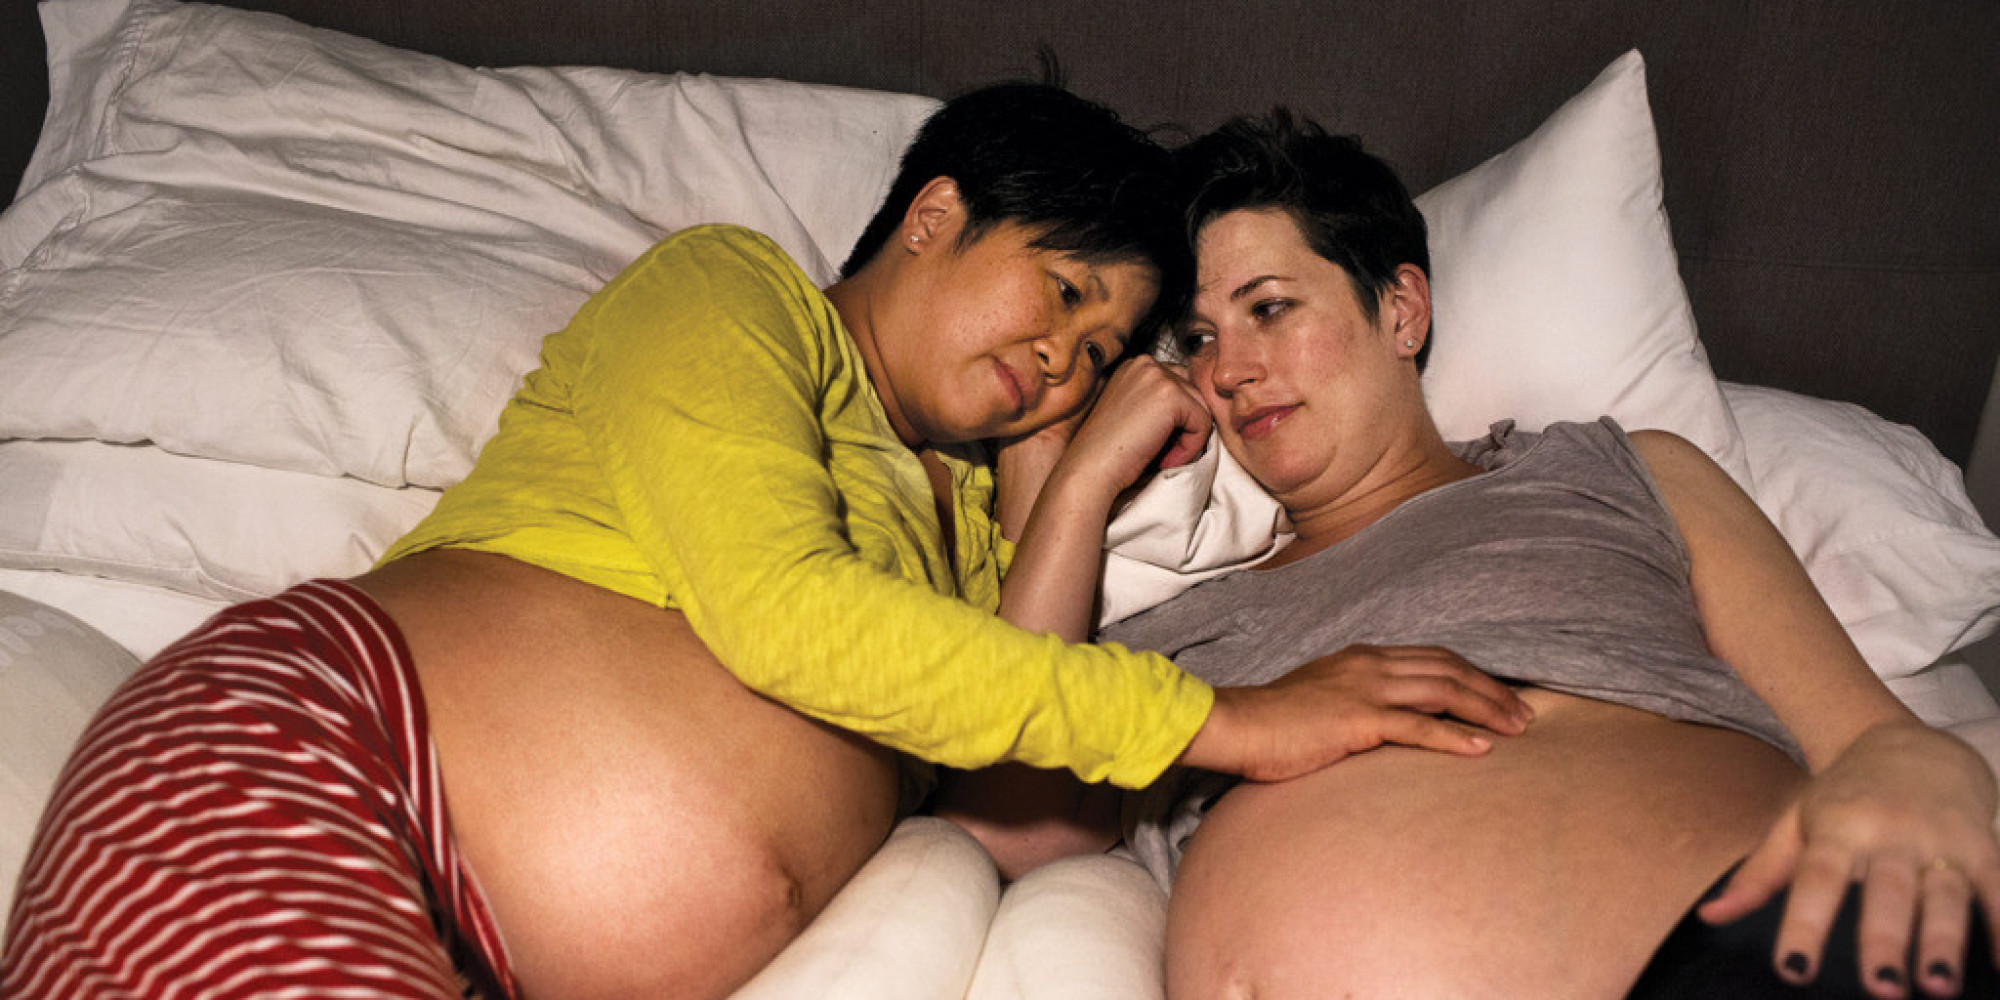 Lesbians Getting Pregnant 95